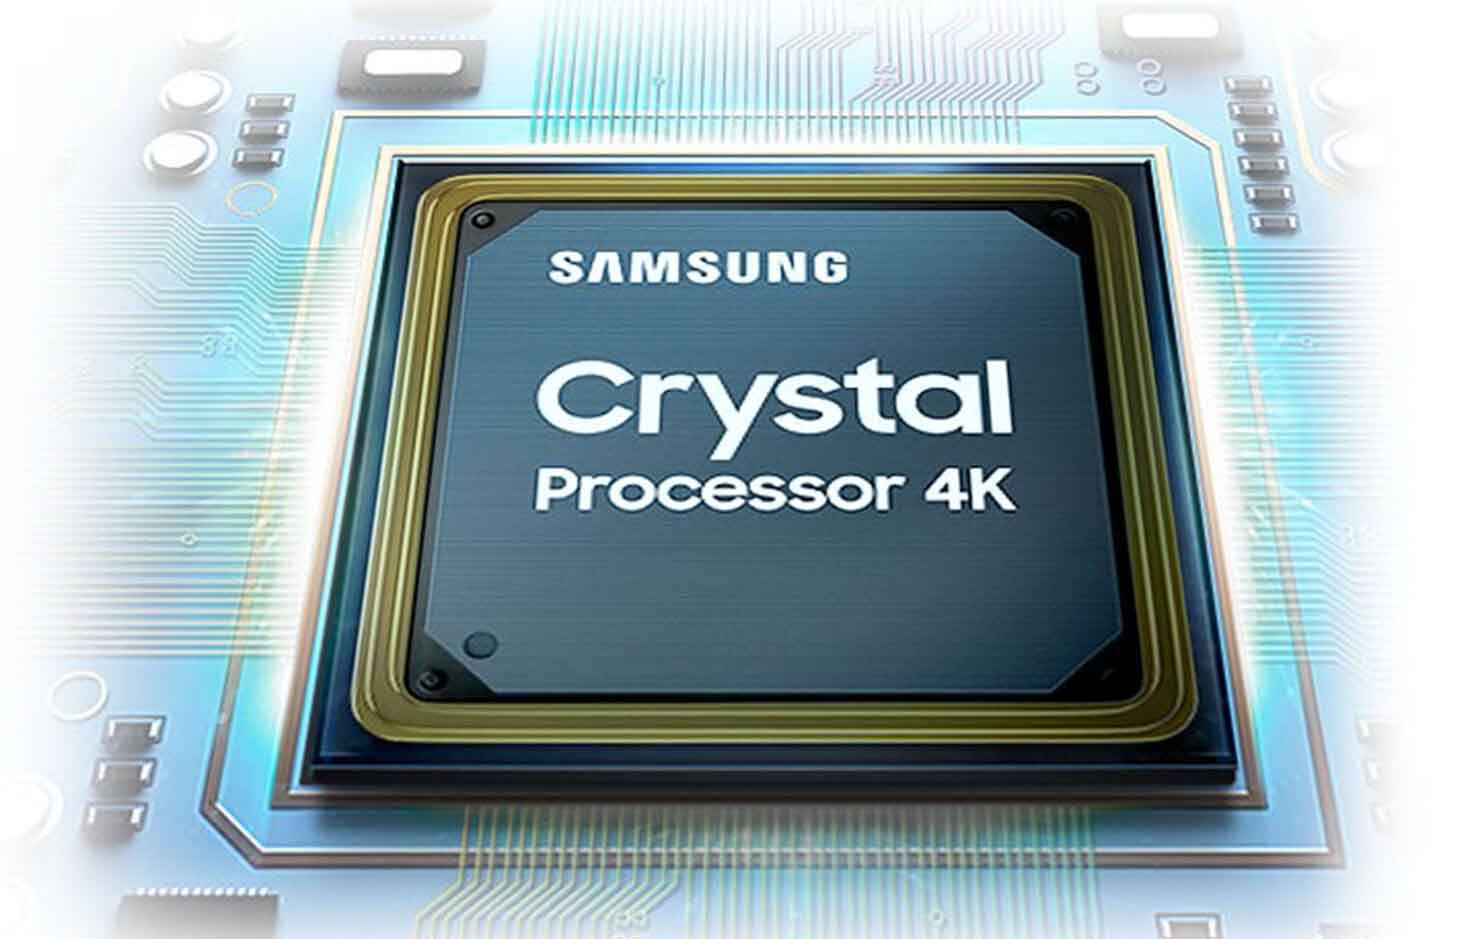 Smart Tivi Samsung 4K 43 inch UA43TU6900 Crystal UHD